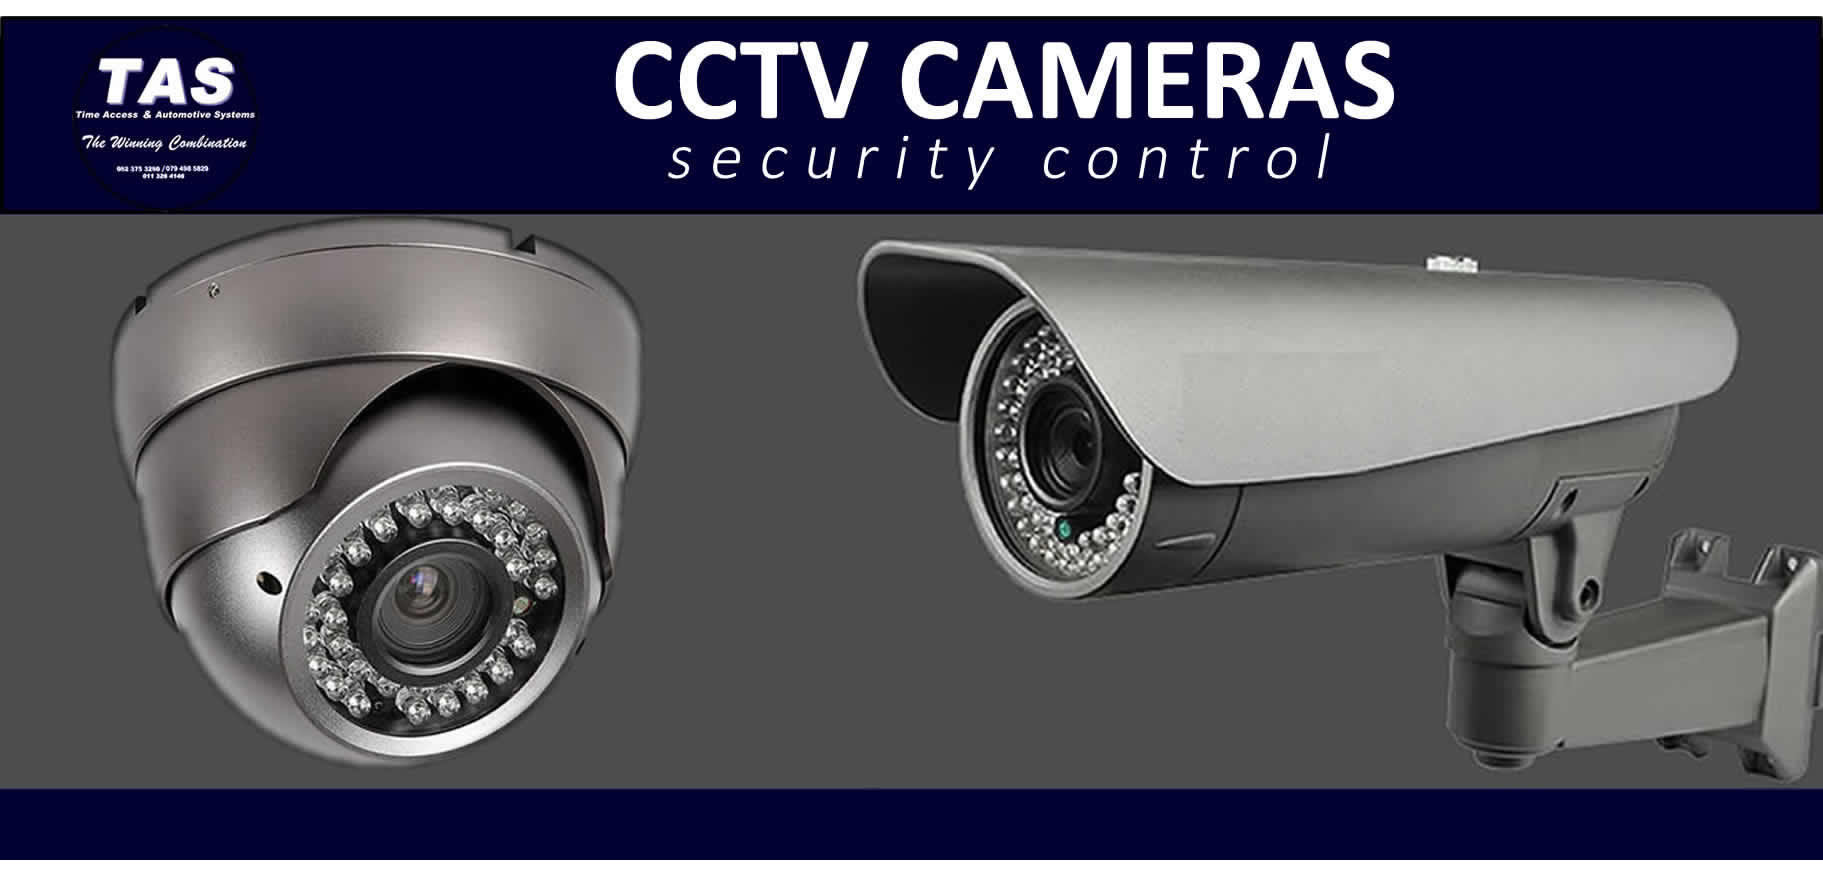 cctv cameras banner